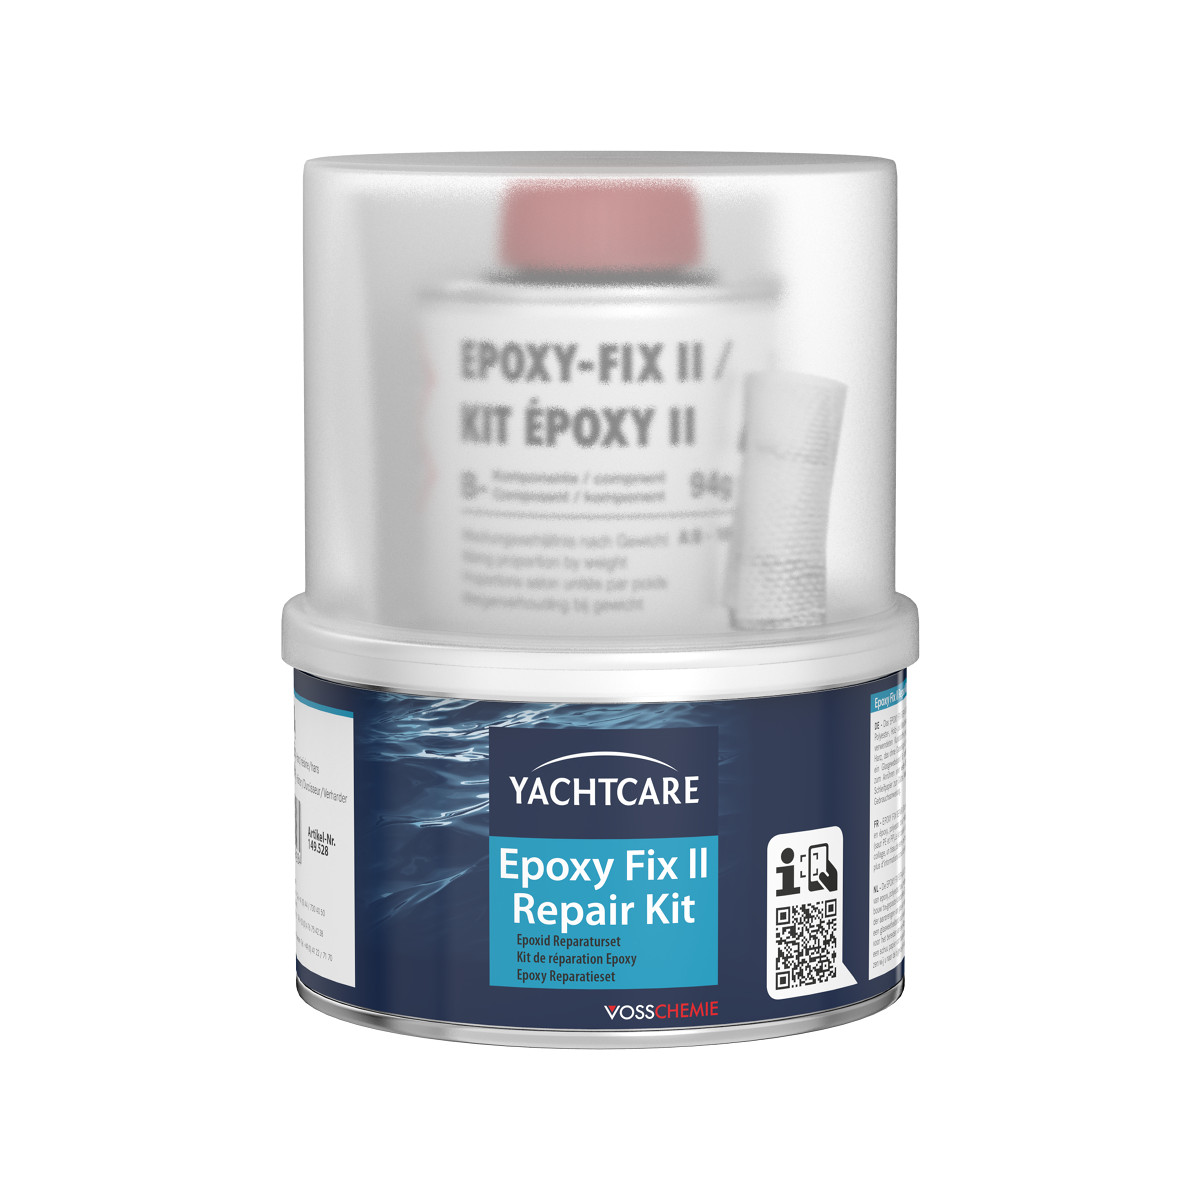 Yachtcare Epoxy Fix II Repair Kit Epoxid-reparatieset - 250g